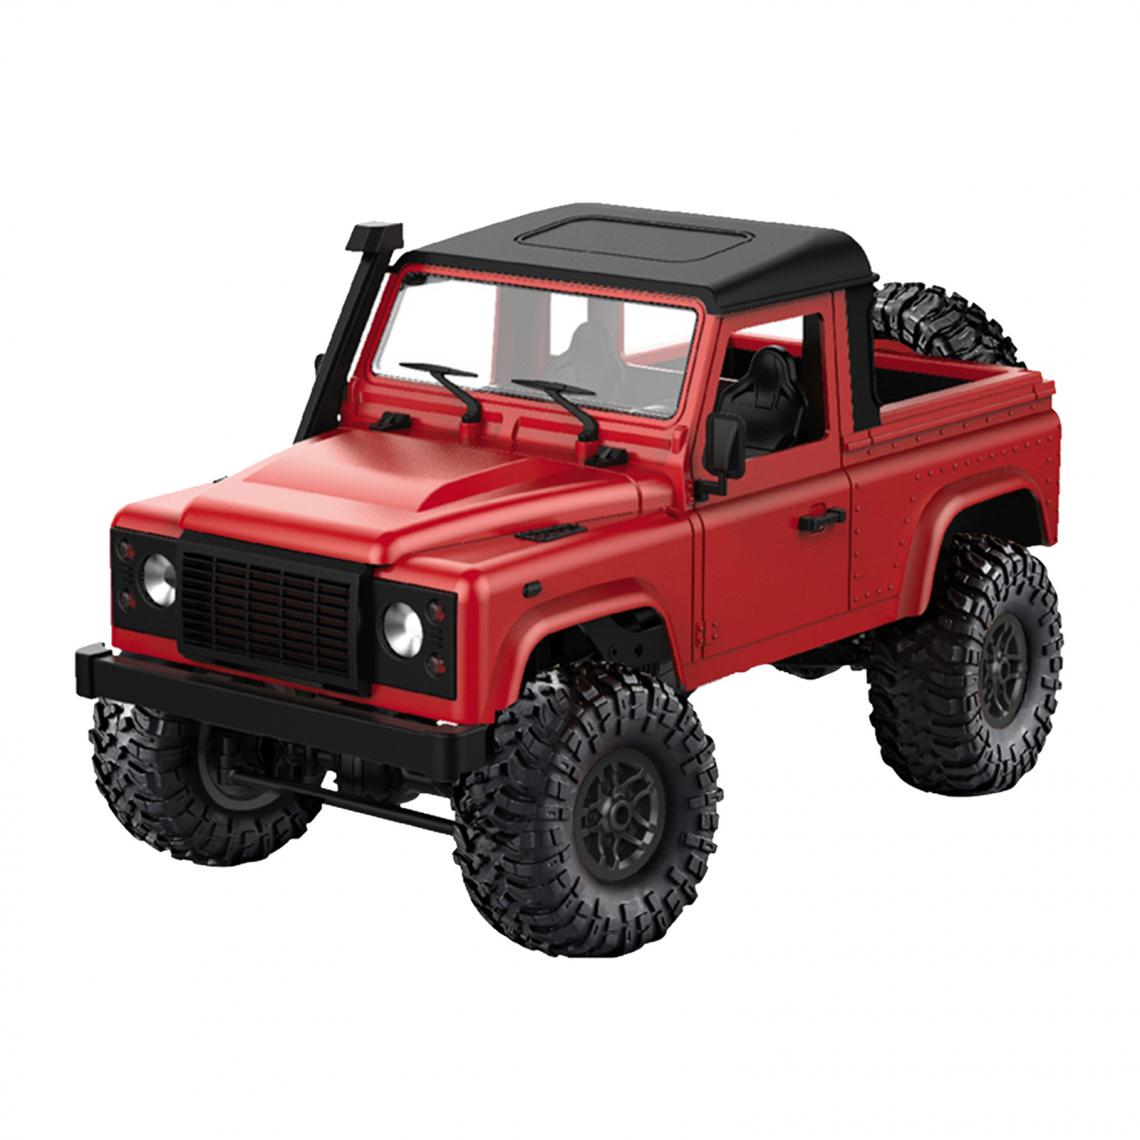 marque generique - 1/12 4WD 2.4G MN91 Rock Crawler Télécommande Off Road Truck RC Car Red - Accessoires maquettes